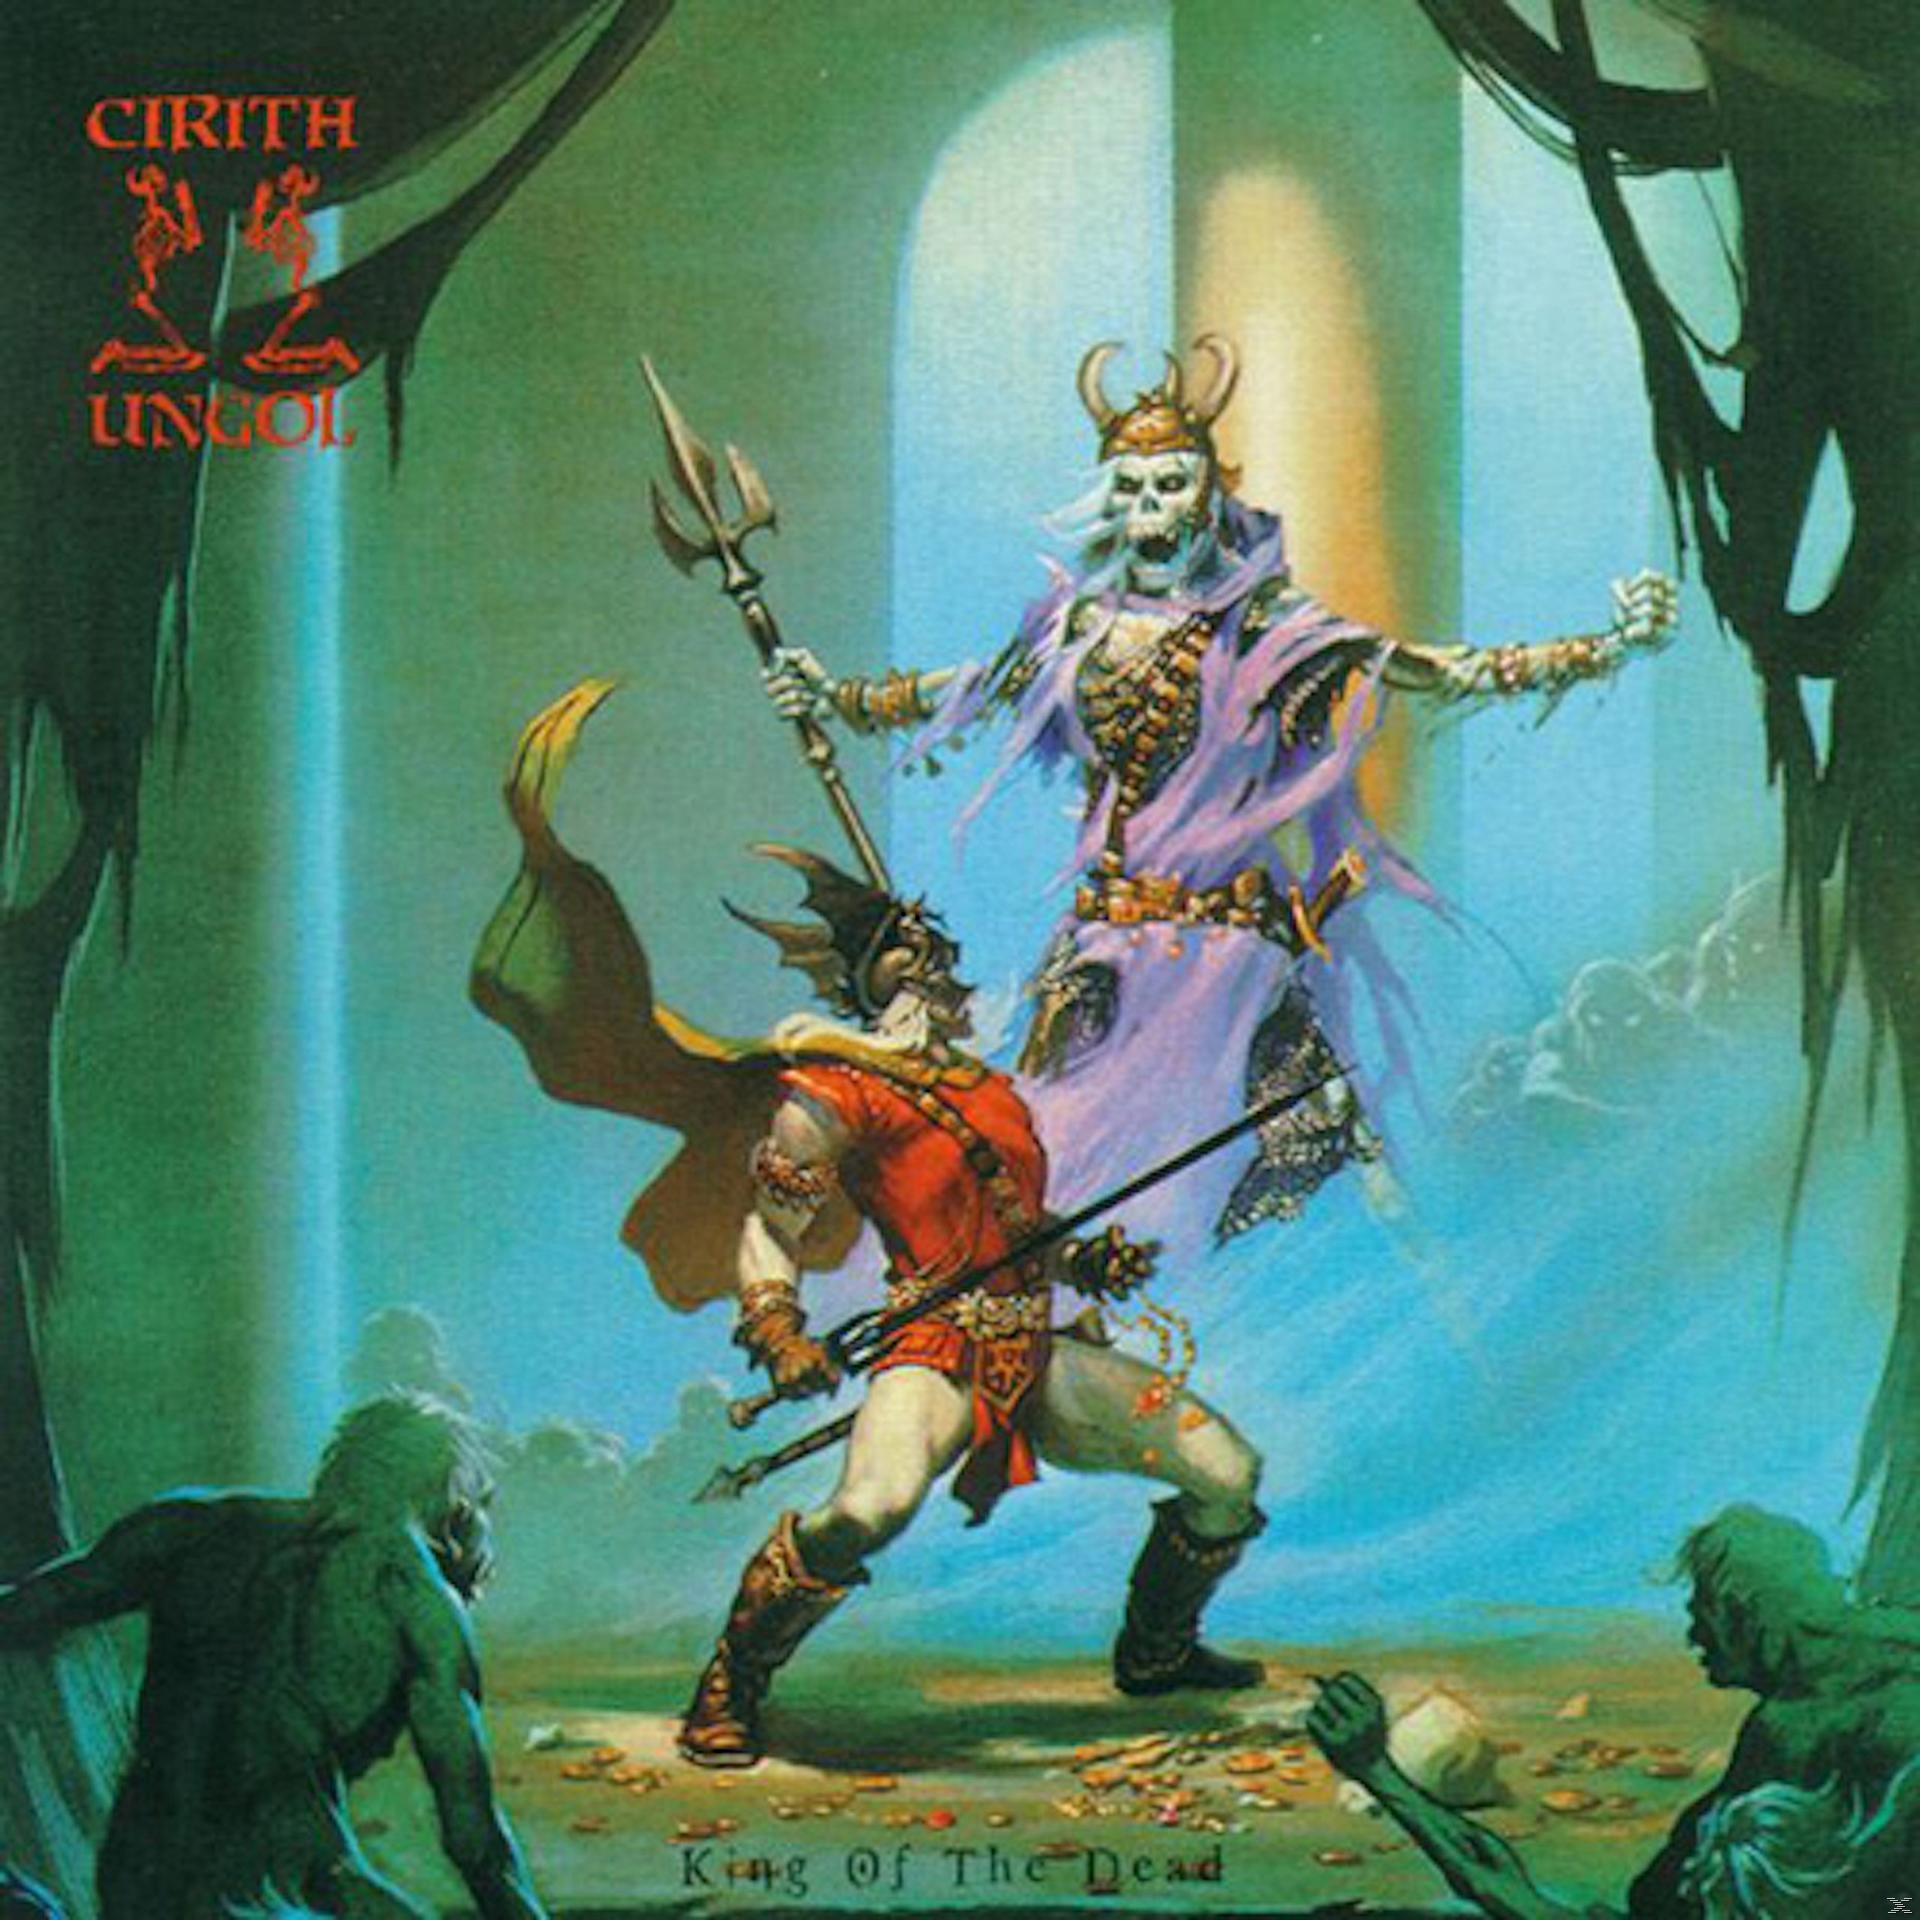 Cirith Ungol - Ltd Black (Vinyl) Ed - of King the Dead-180g Vinyl